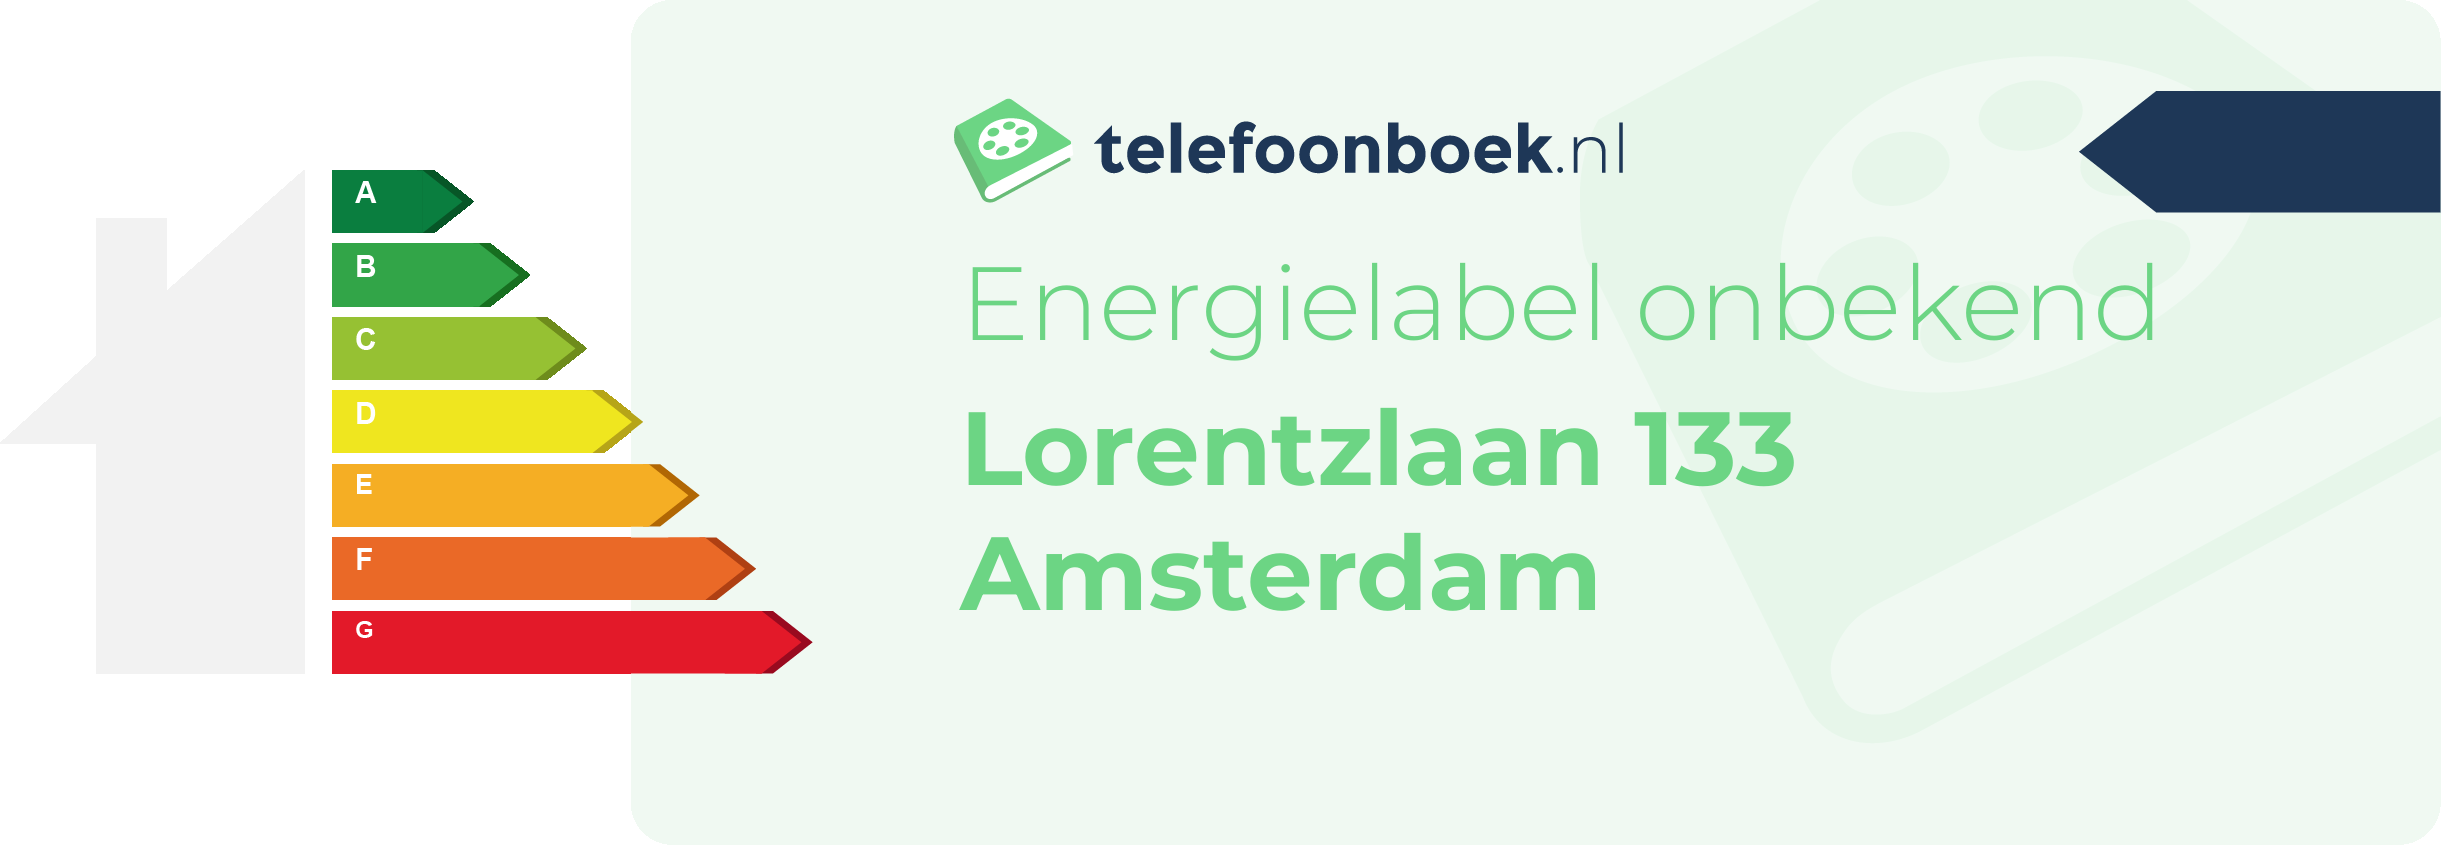 Energielabel Lorentzlaan 133 Amsterdam